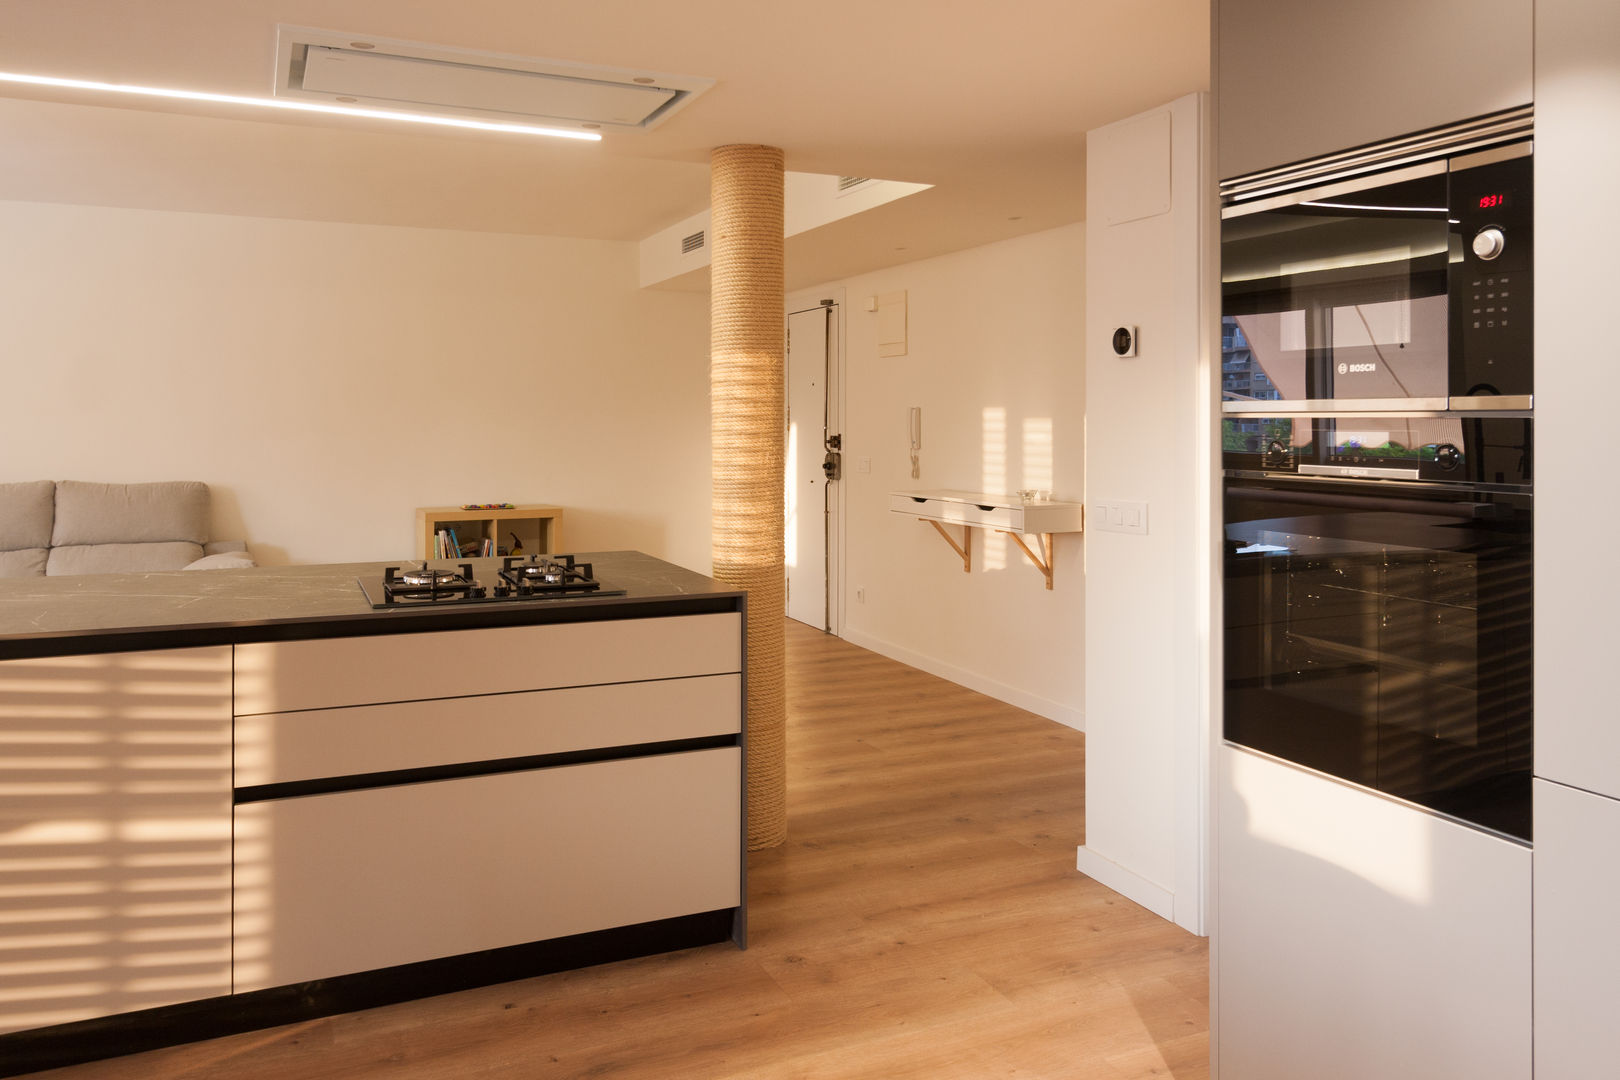 Apartamento DEMOLIDO y REMODELADO completamente, VICEVERSA Architecture & Design VICEVERSA Architecture & Design Встроенные кухни